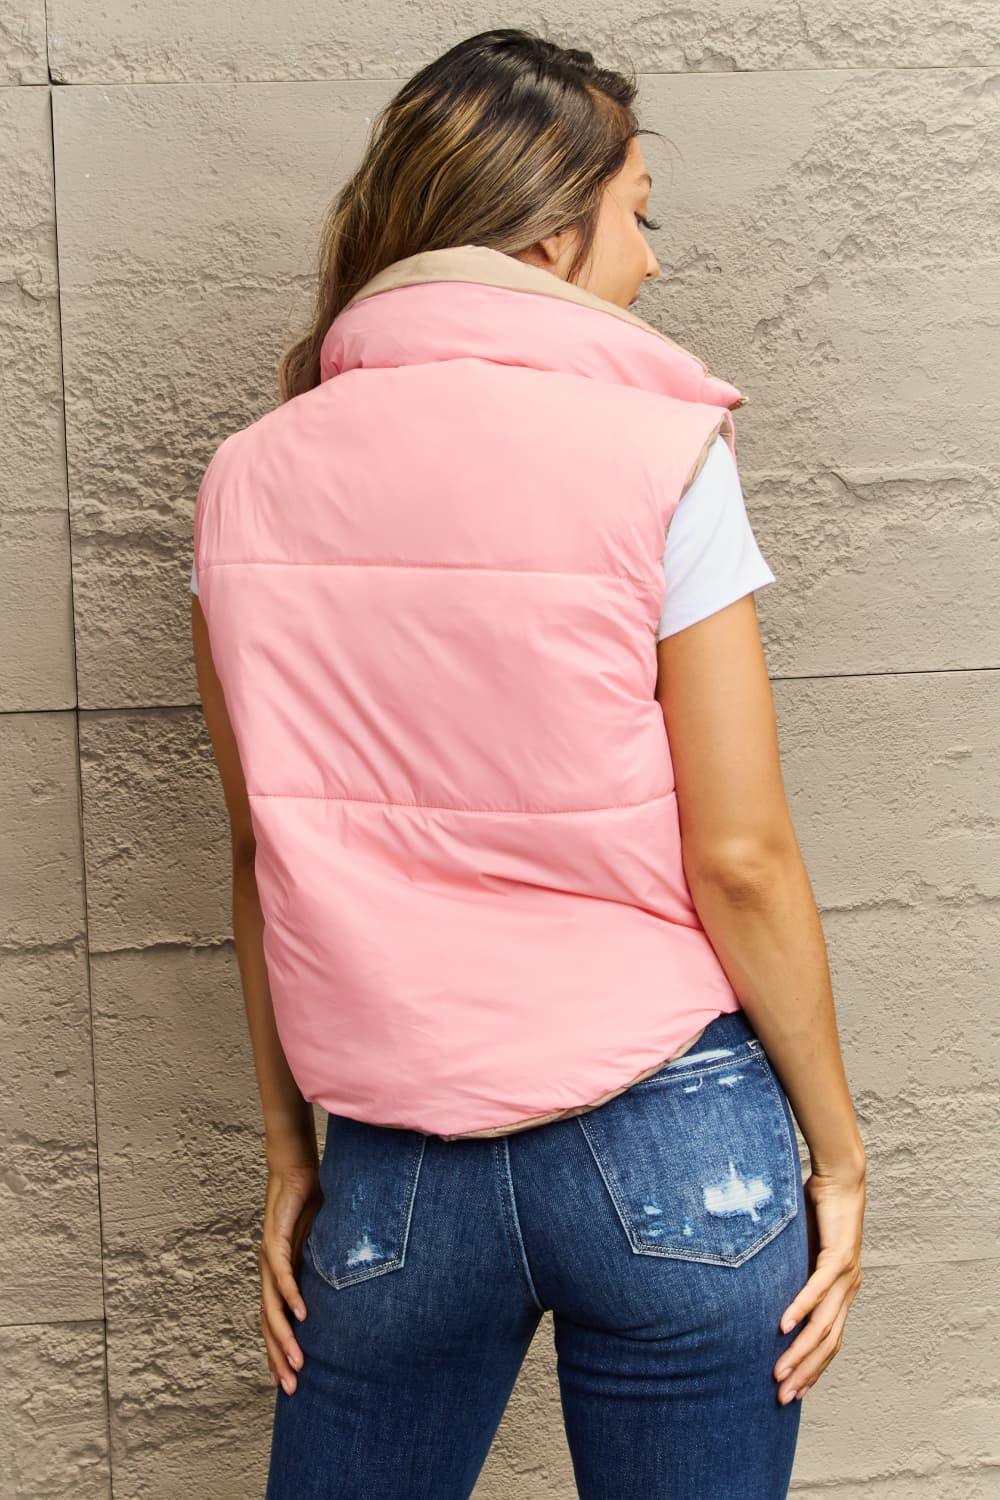 Zip-Up Drawstring Puffer Vest - Lab Fashion, Home & Health